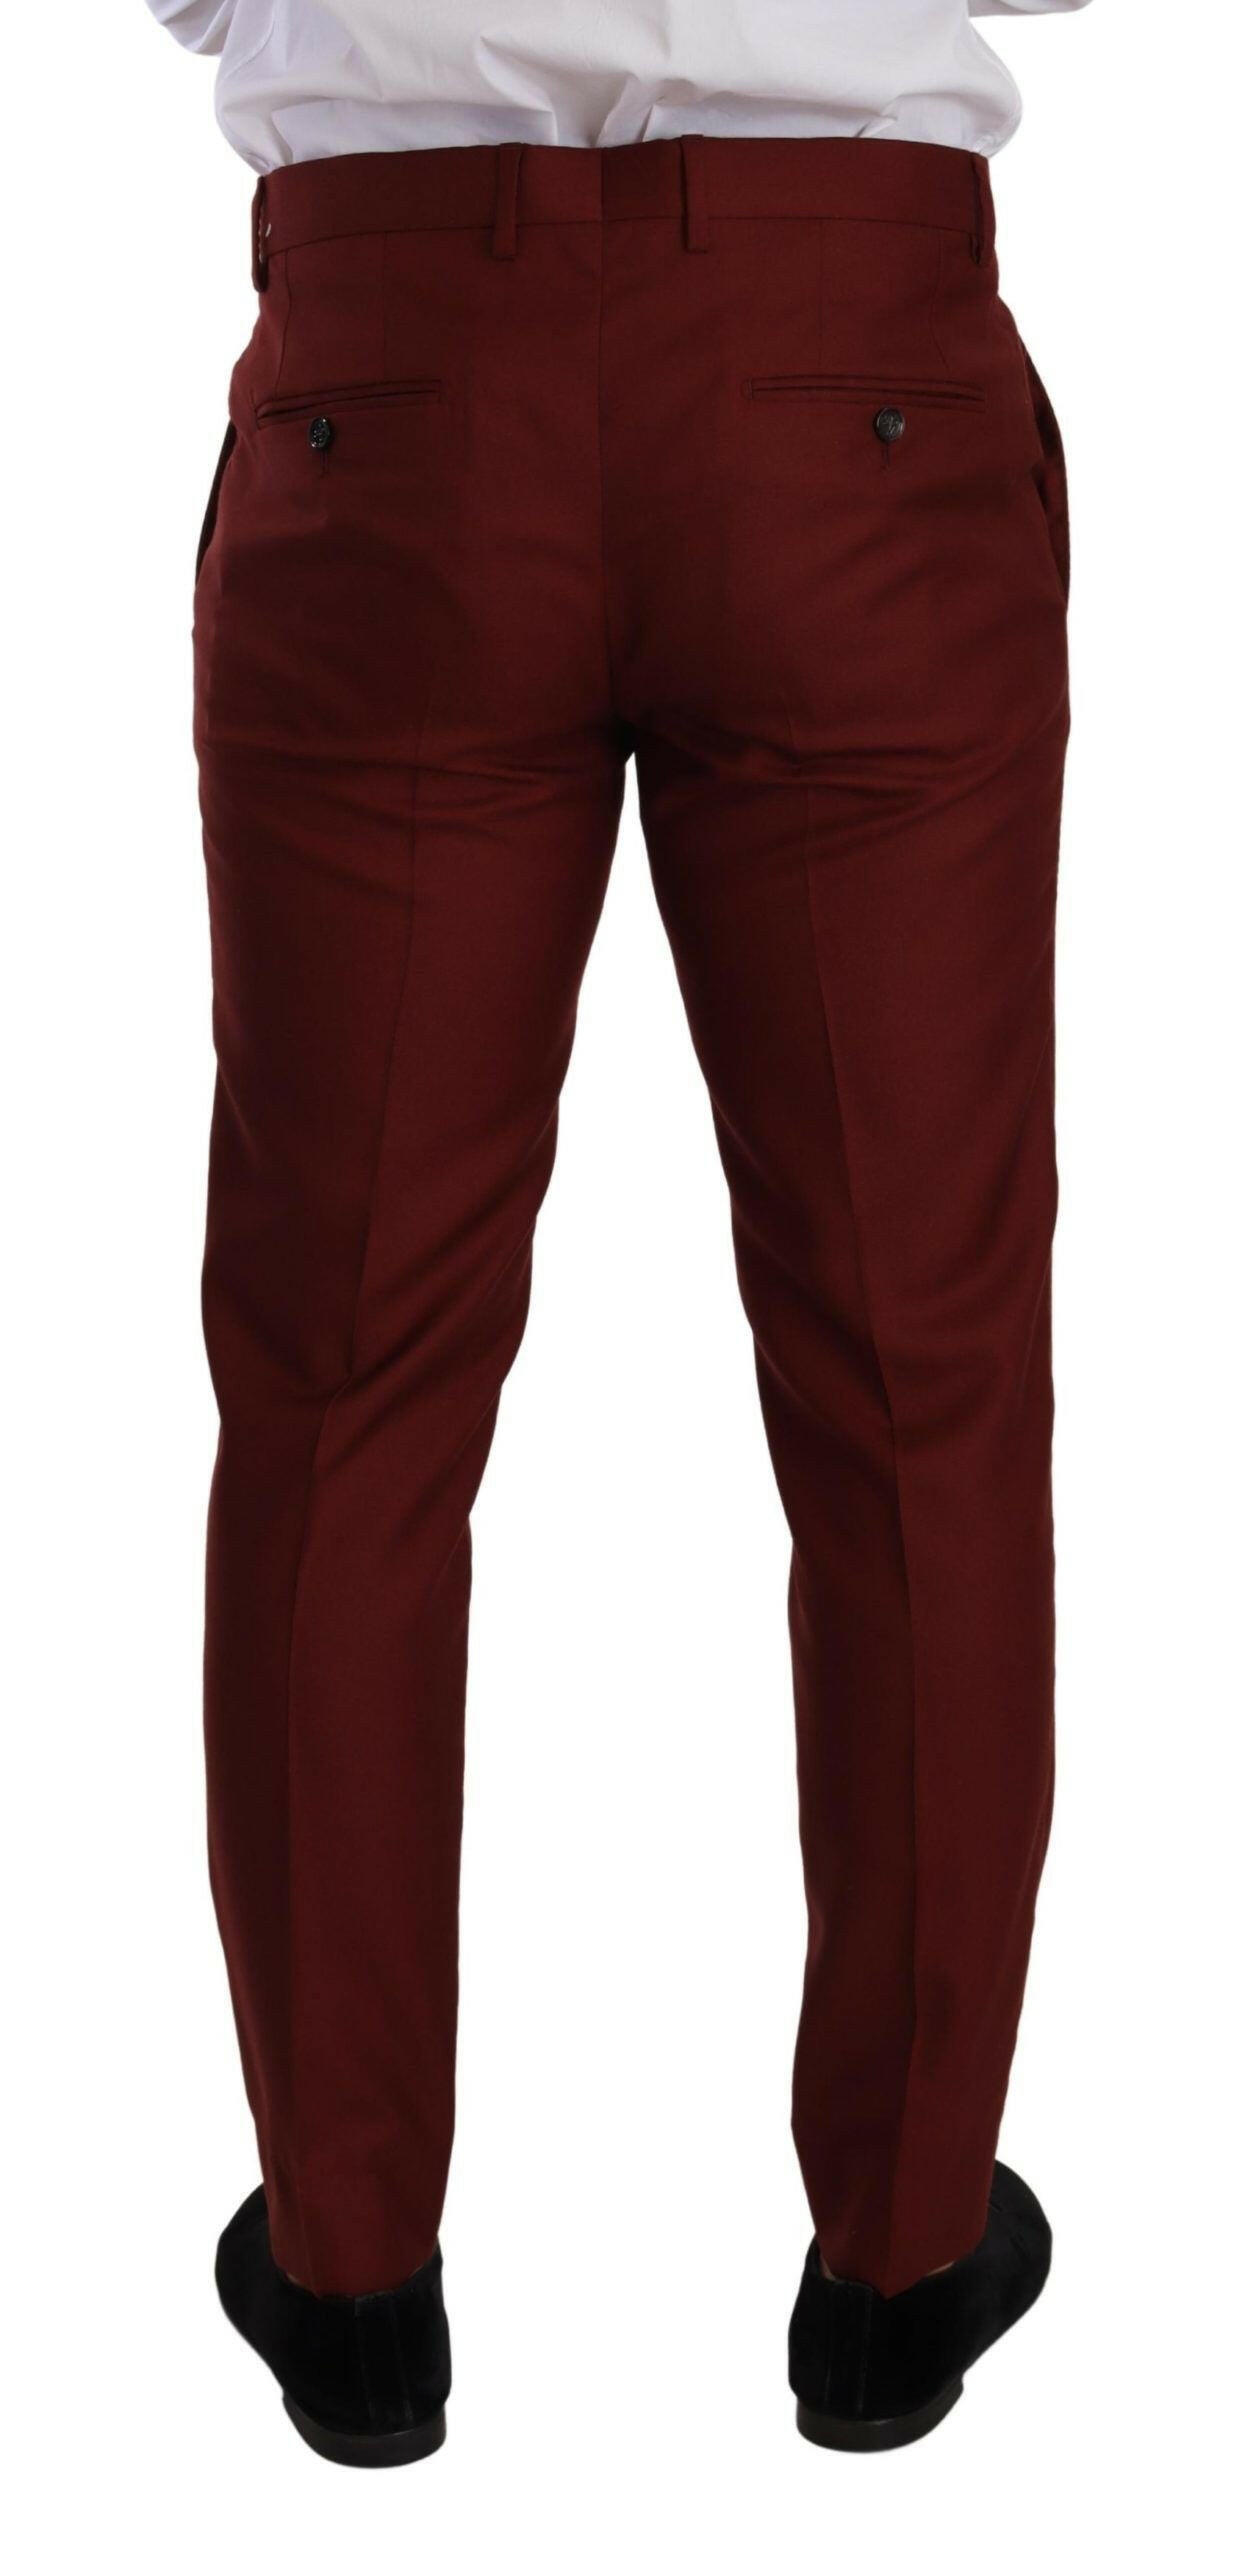 Dolce & Gabbana Red Cashmere Silk Dress Men Trouser Pants - GENUINE AUTHENTIC BRAND LLC  